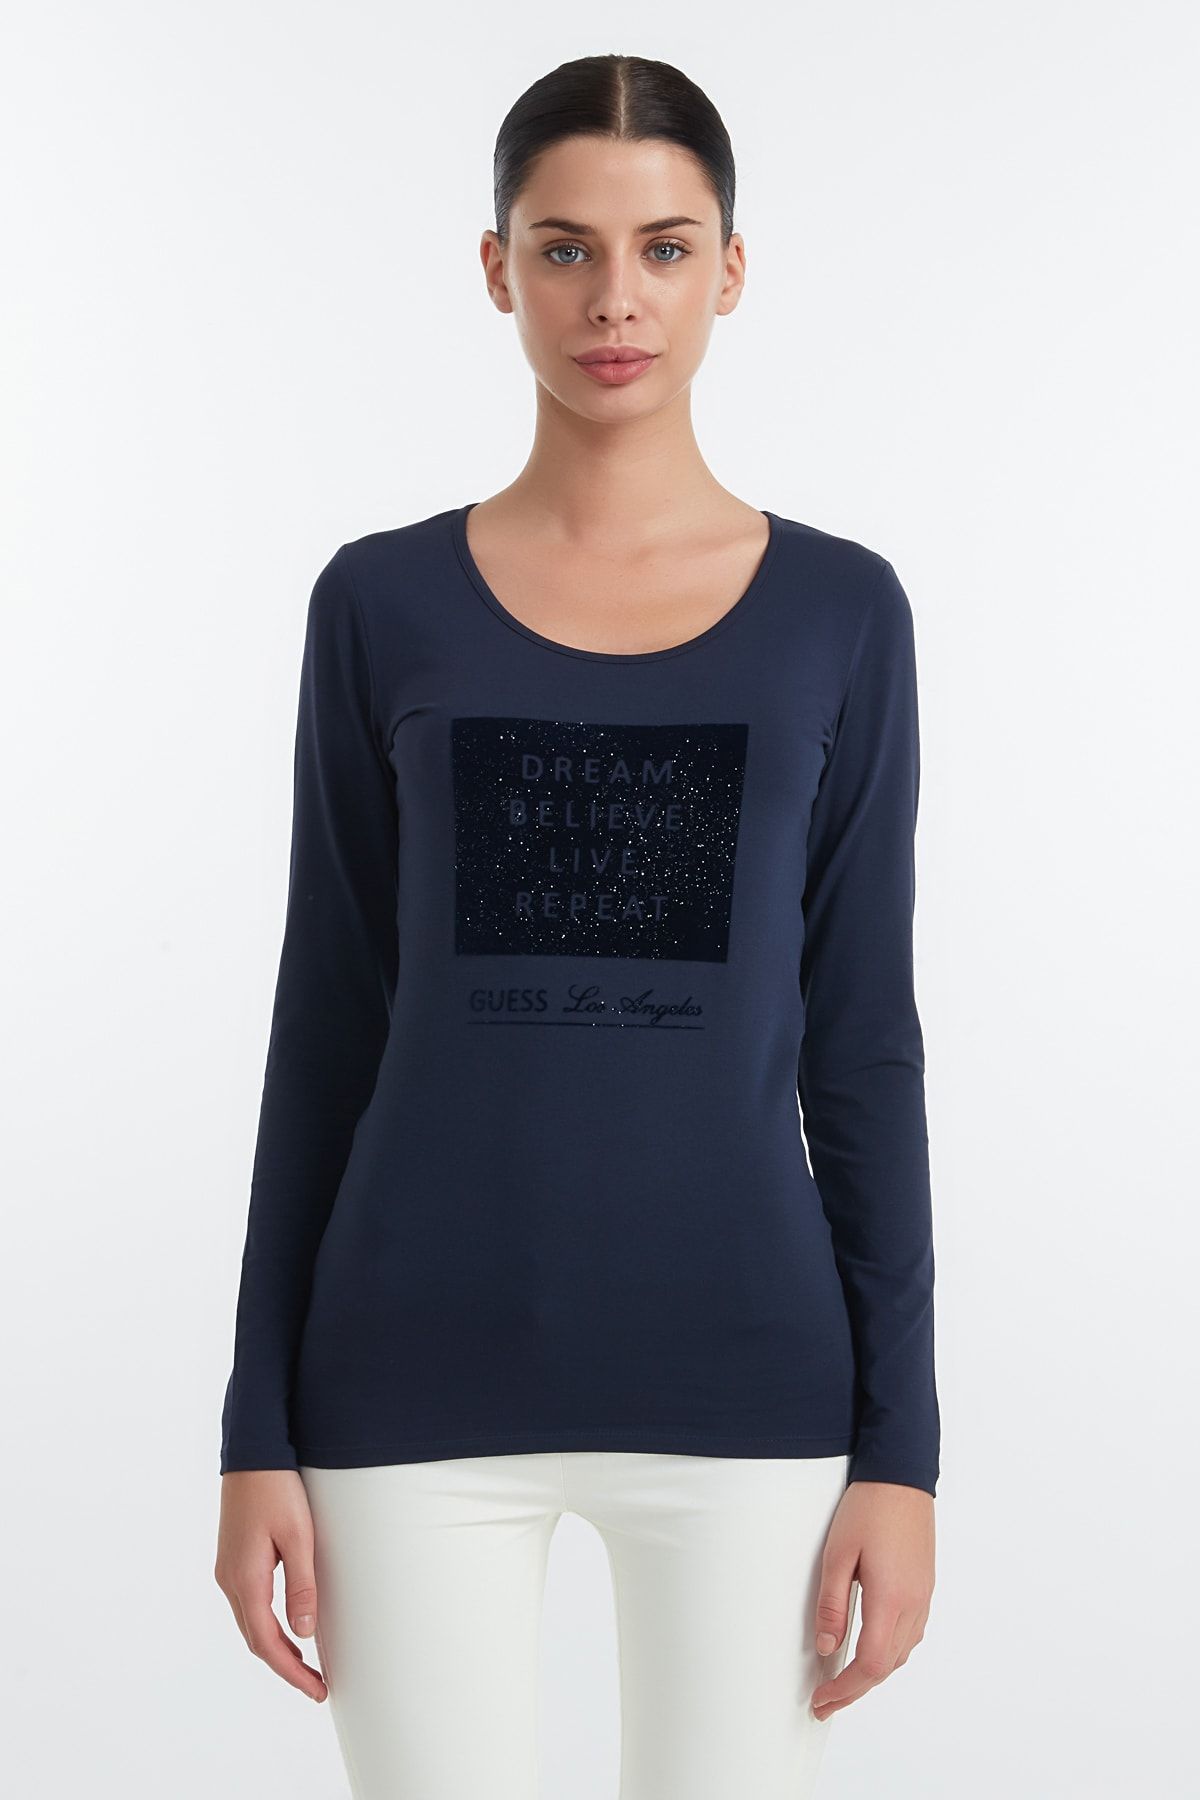 Guess Collection Kadın Lacivert T-Shirt W64I22J1319